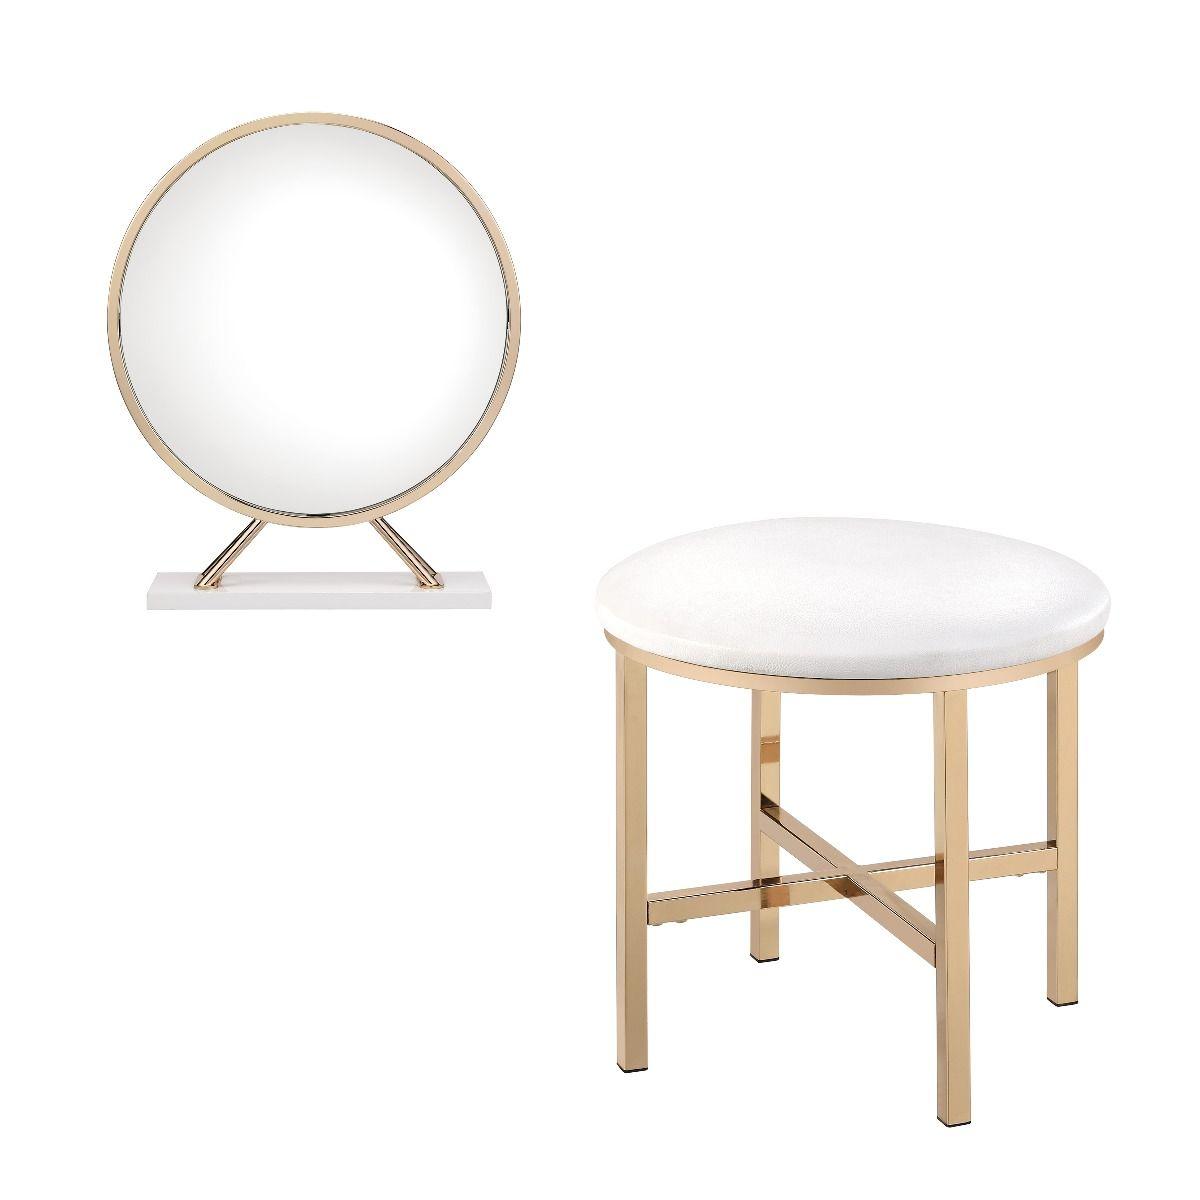 ACME - Midriaks - Vanity Mirror & Stool - PU, White & Gold Finish - 5th Avenue Furniture